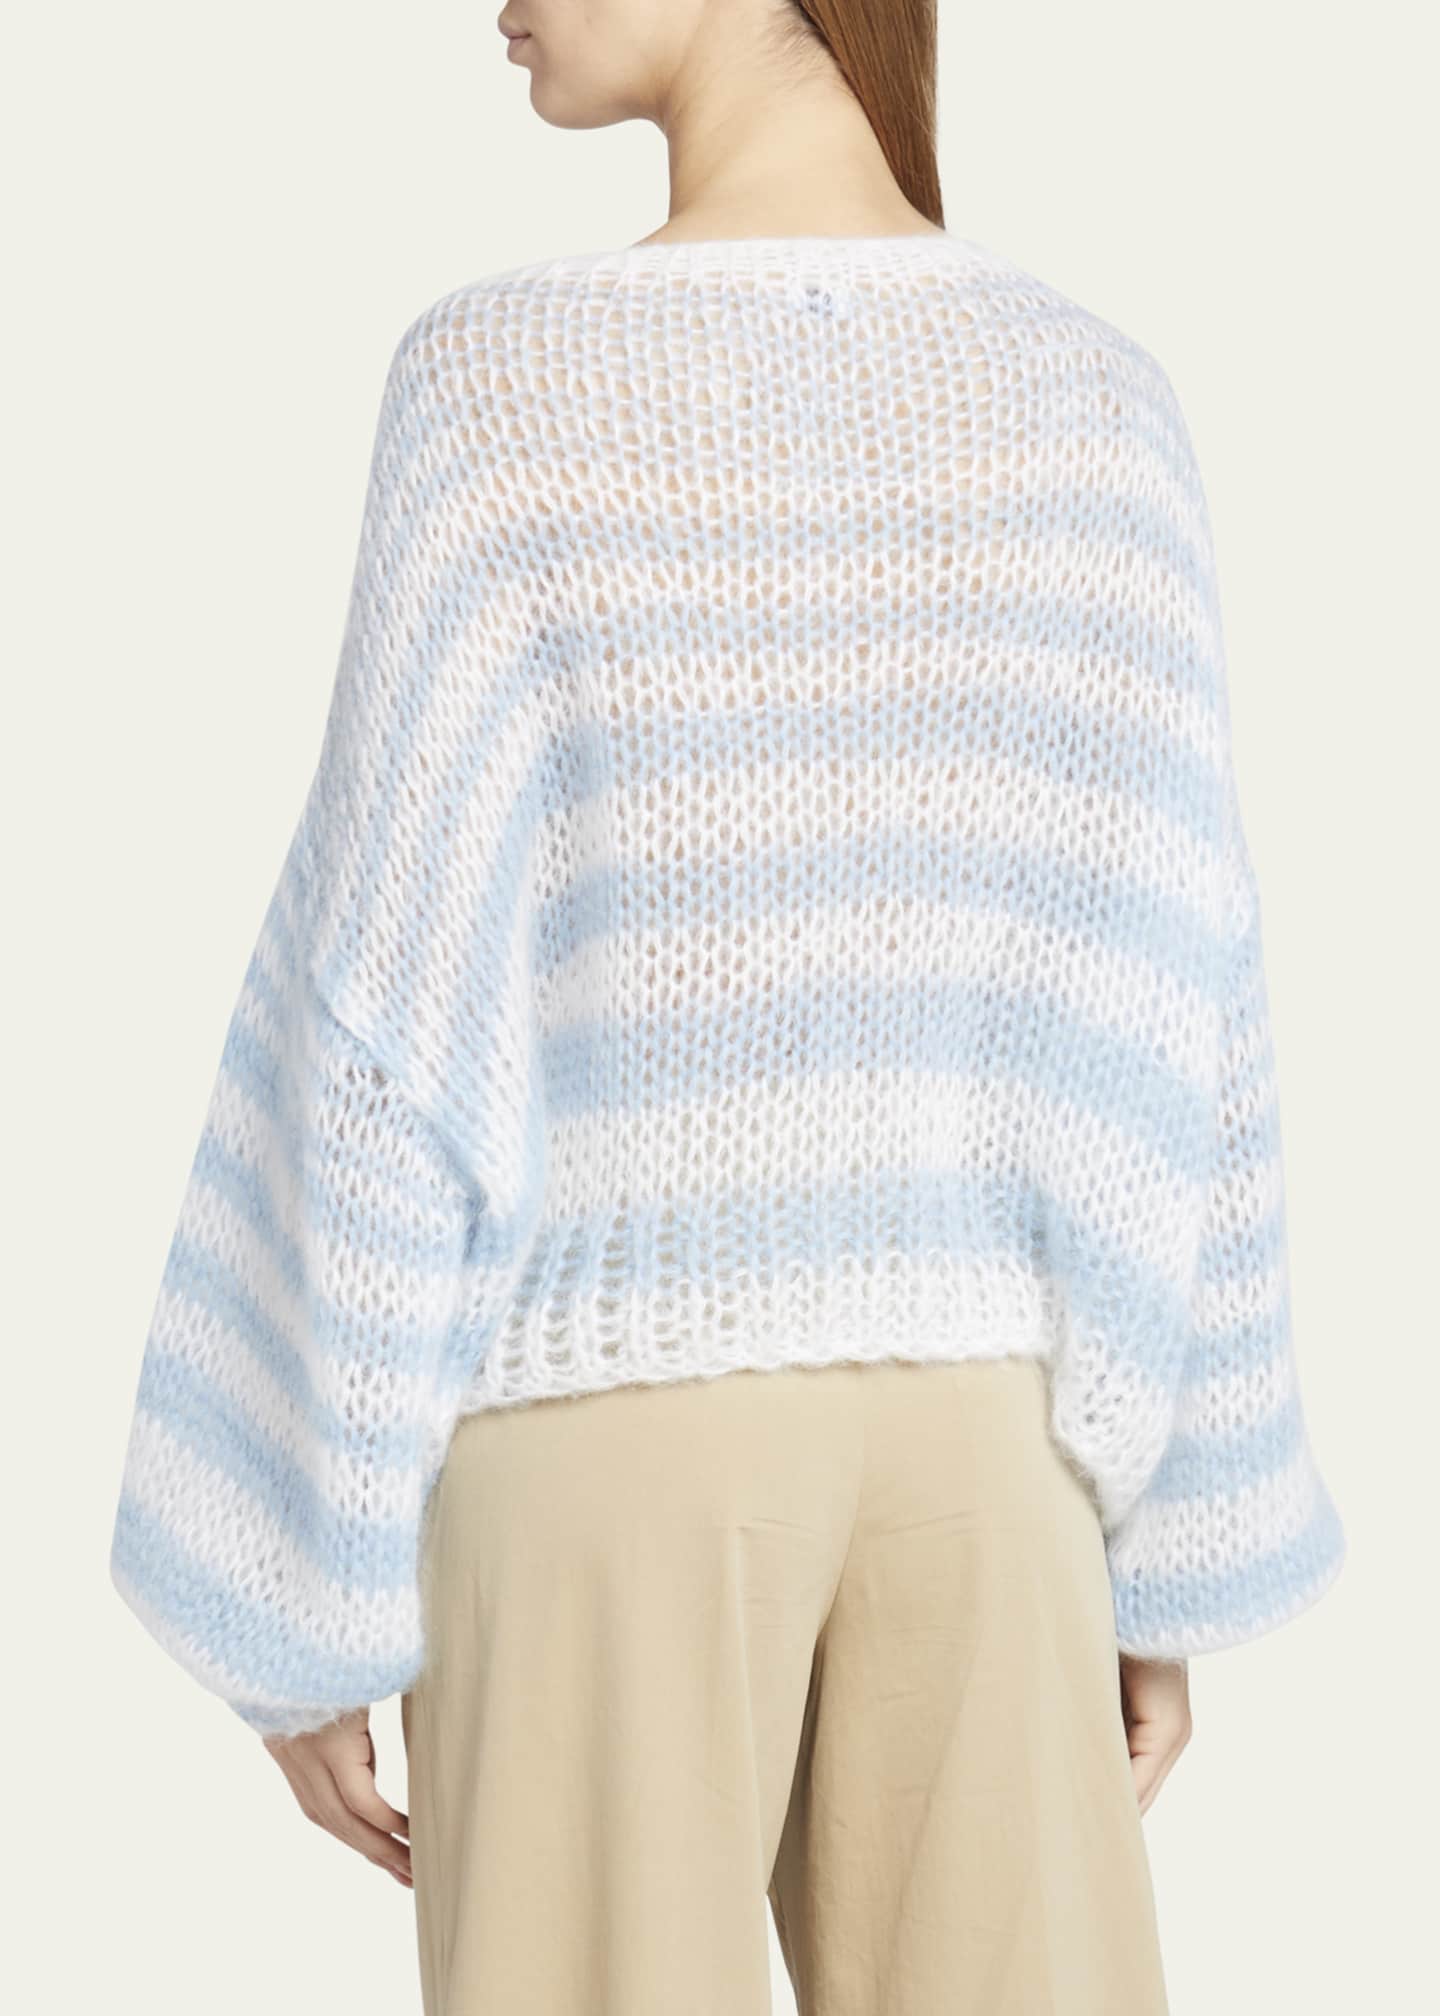 Loewe Striped Anagram Sweater : r/DHgate